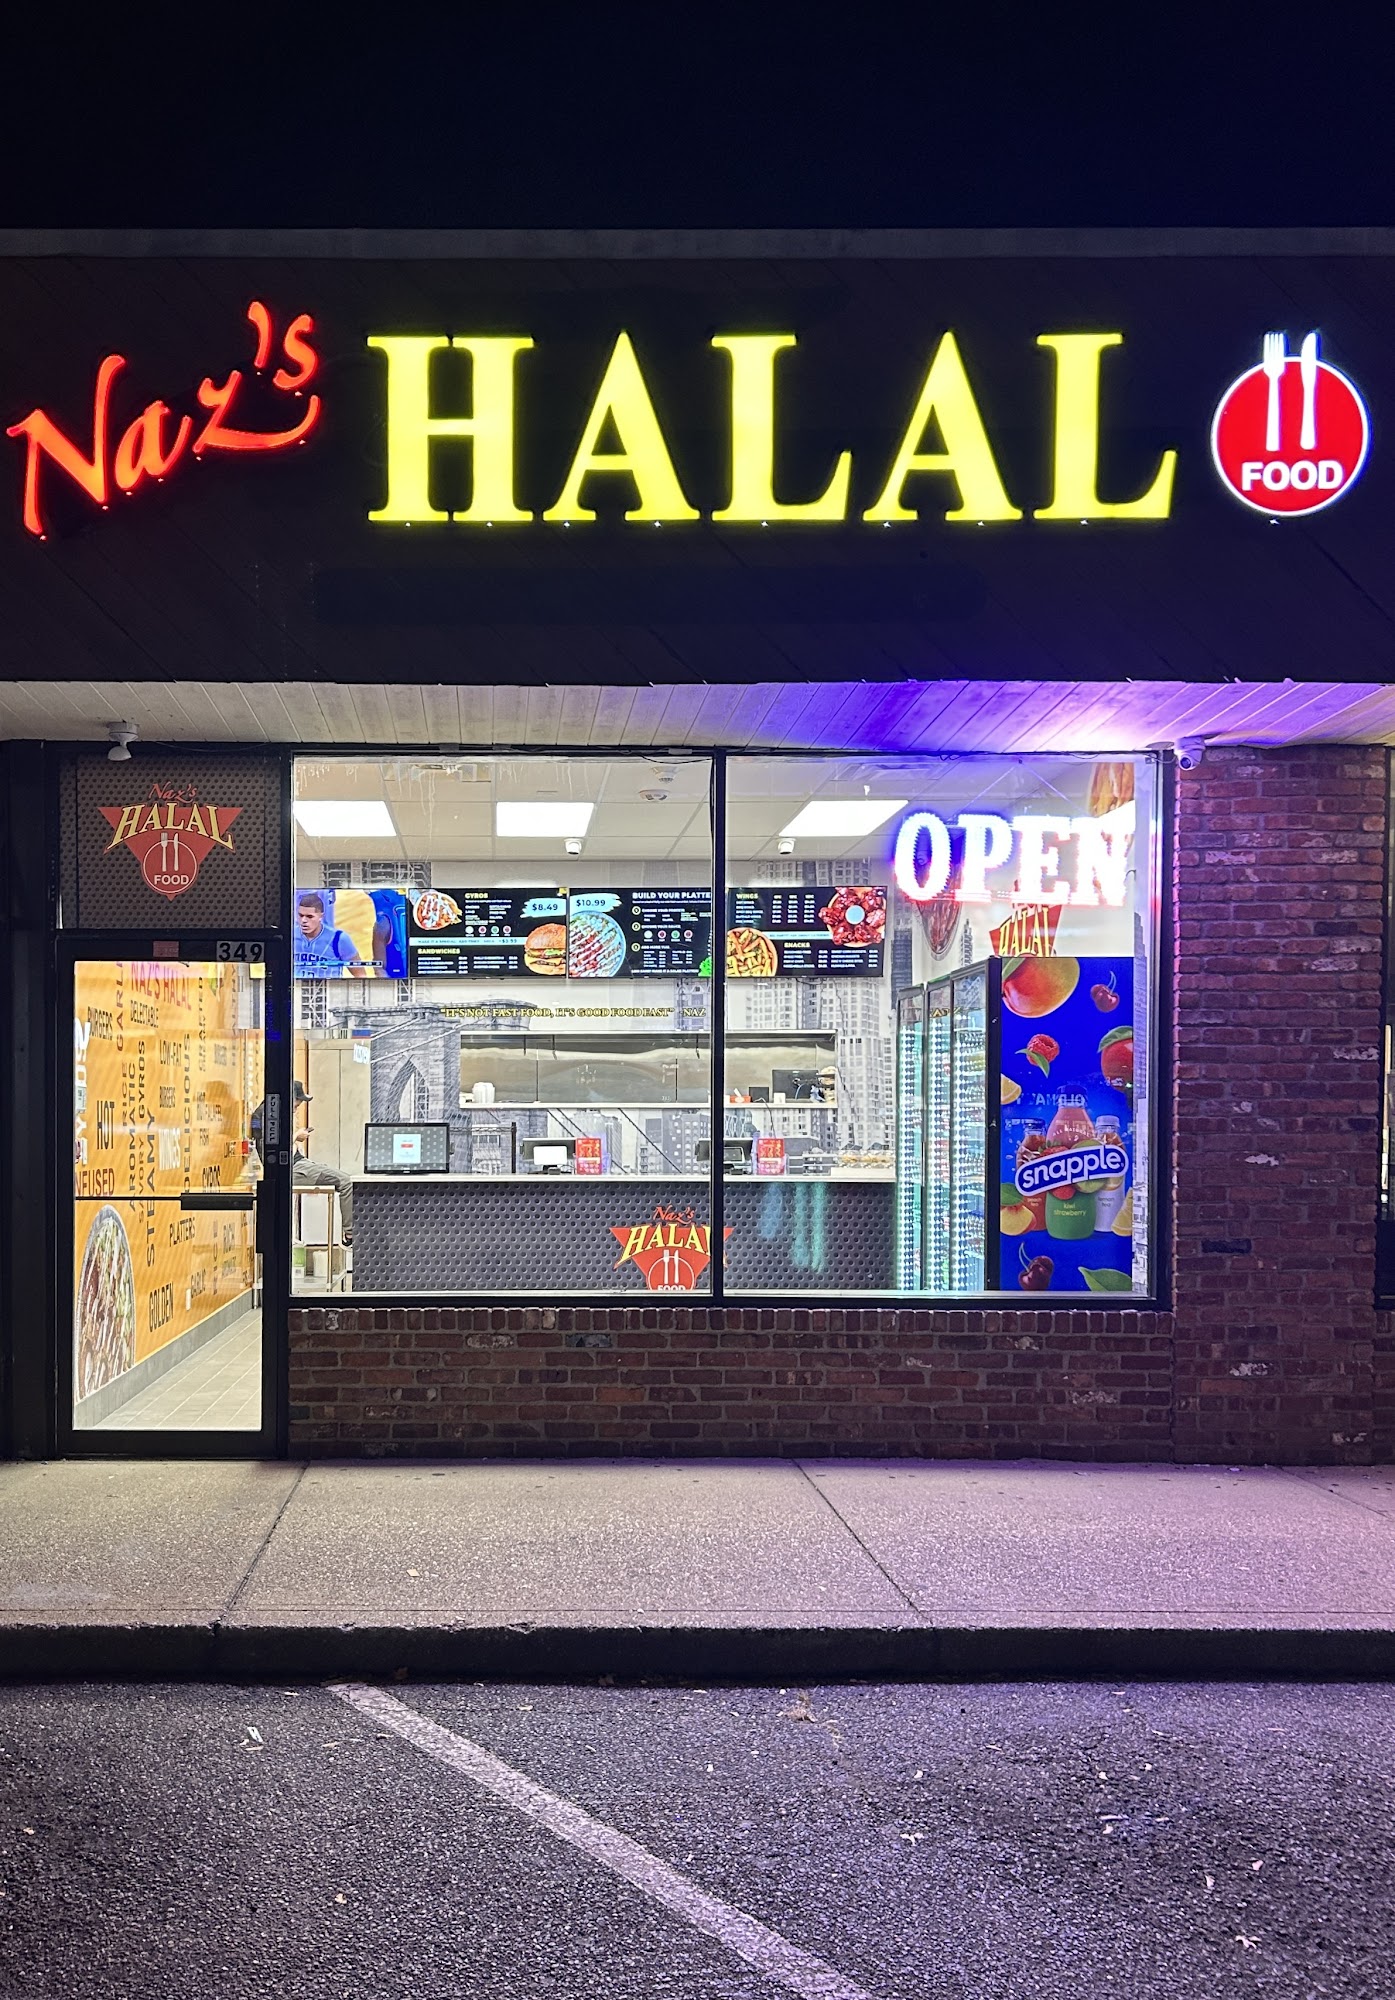 Naz’s Halal Food - Carle Place